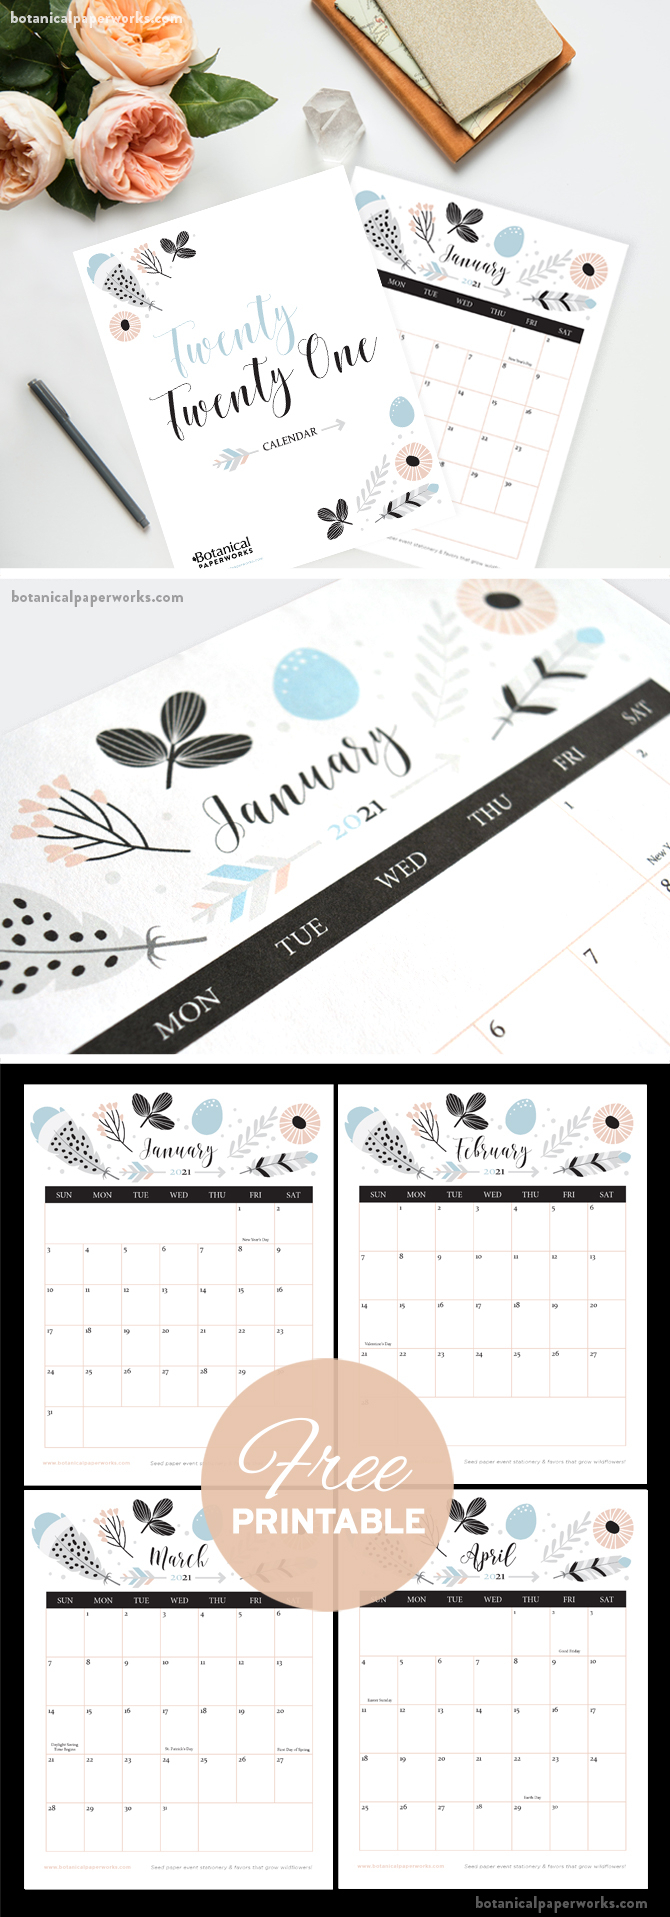 Free Printable 2021 Calendars | Botanical Paperworks